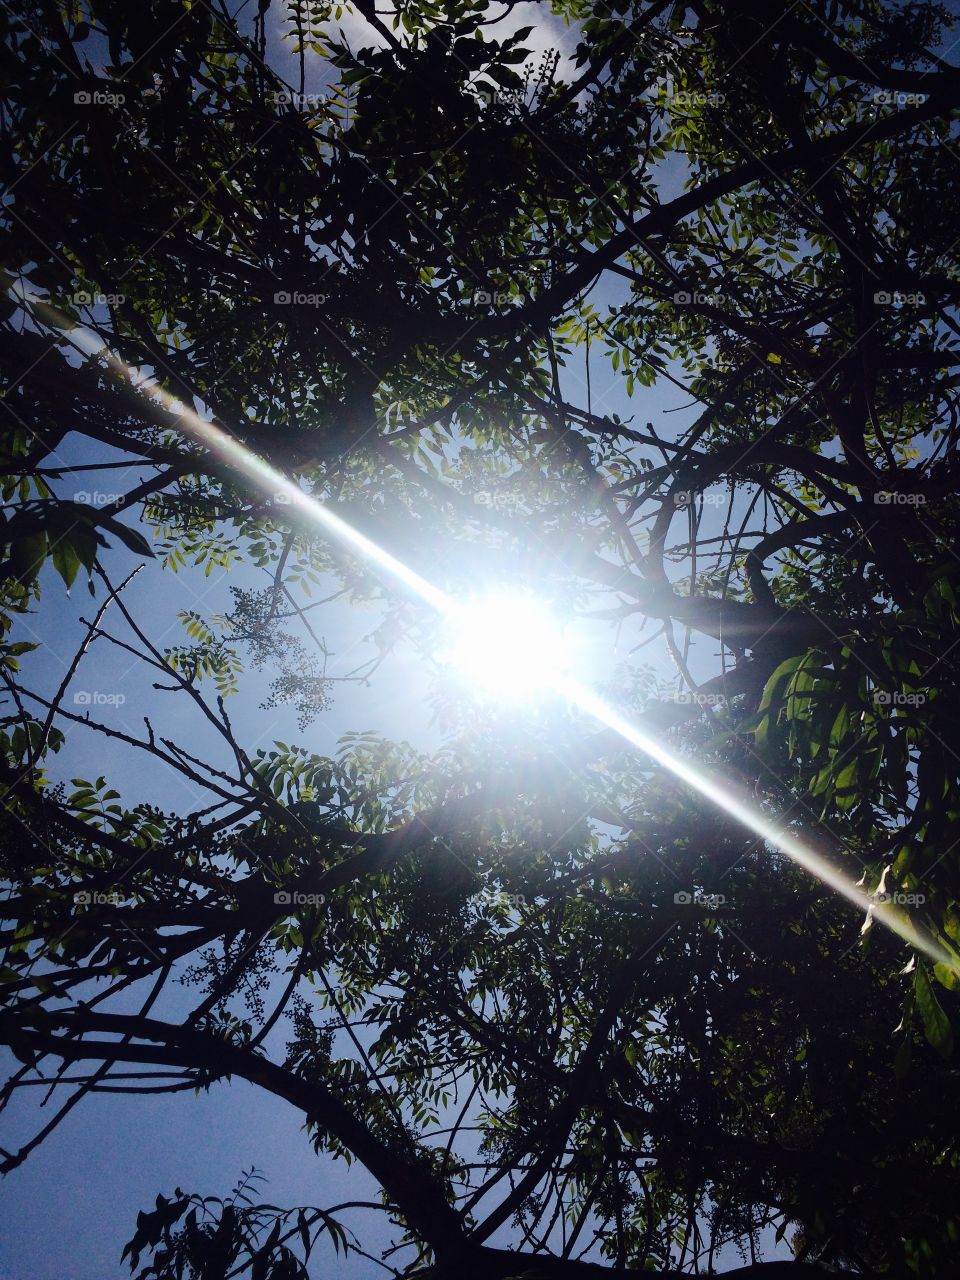 Sunlight passing through the tree branch